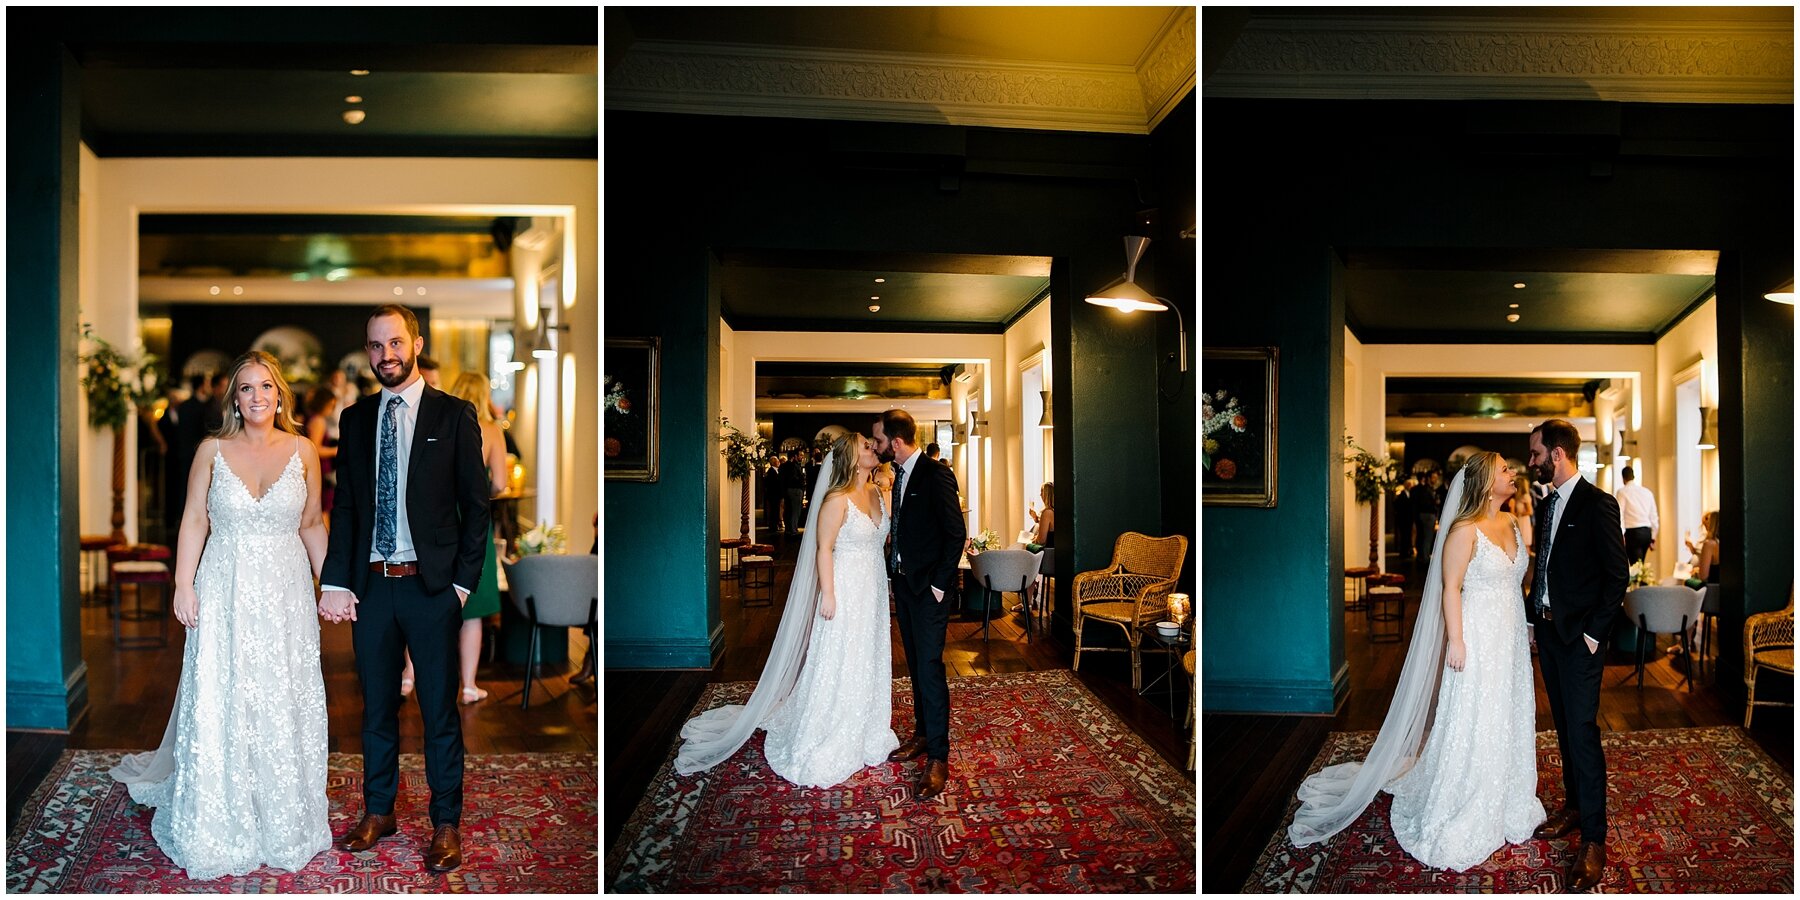 Amazing Guildhall Wedding Photos